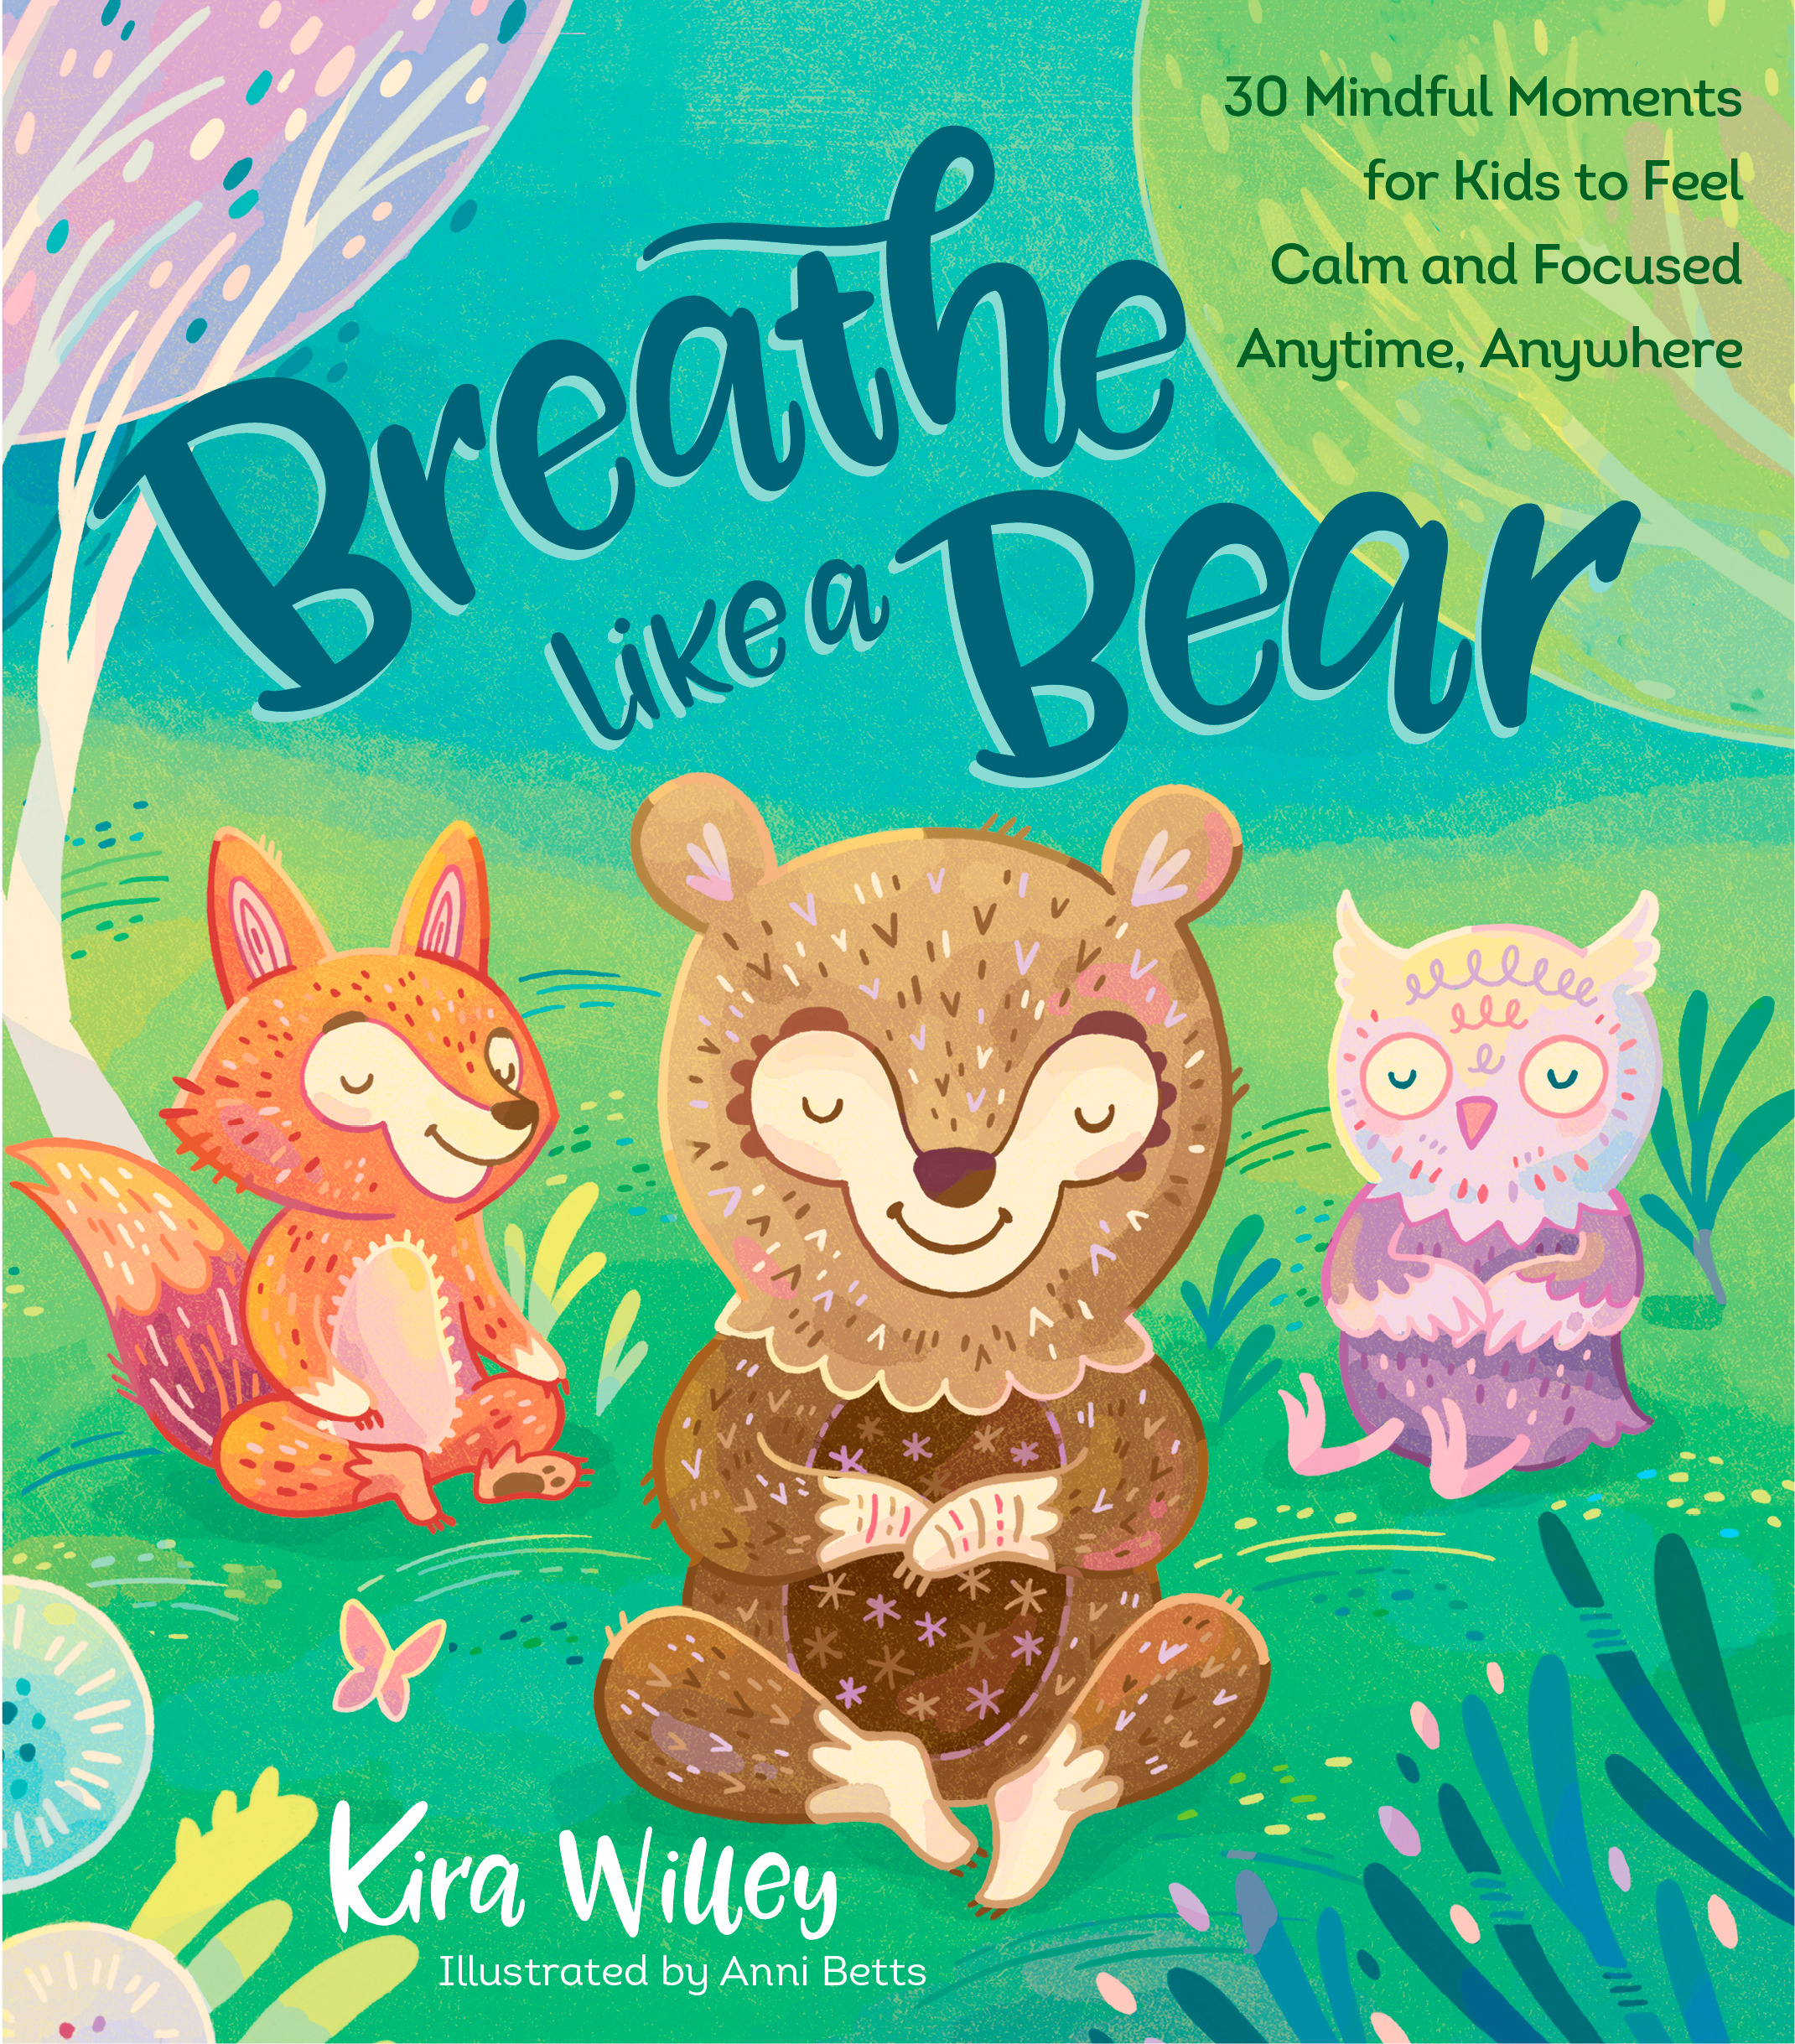 Breathe Like a Bear Mindfulness Activities